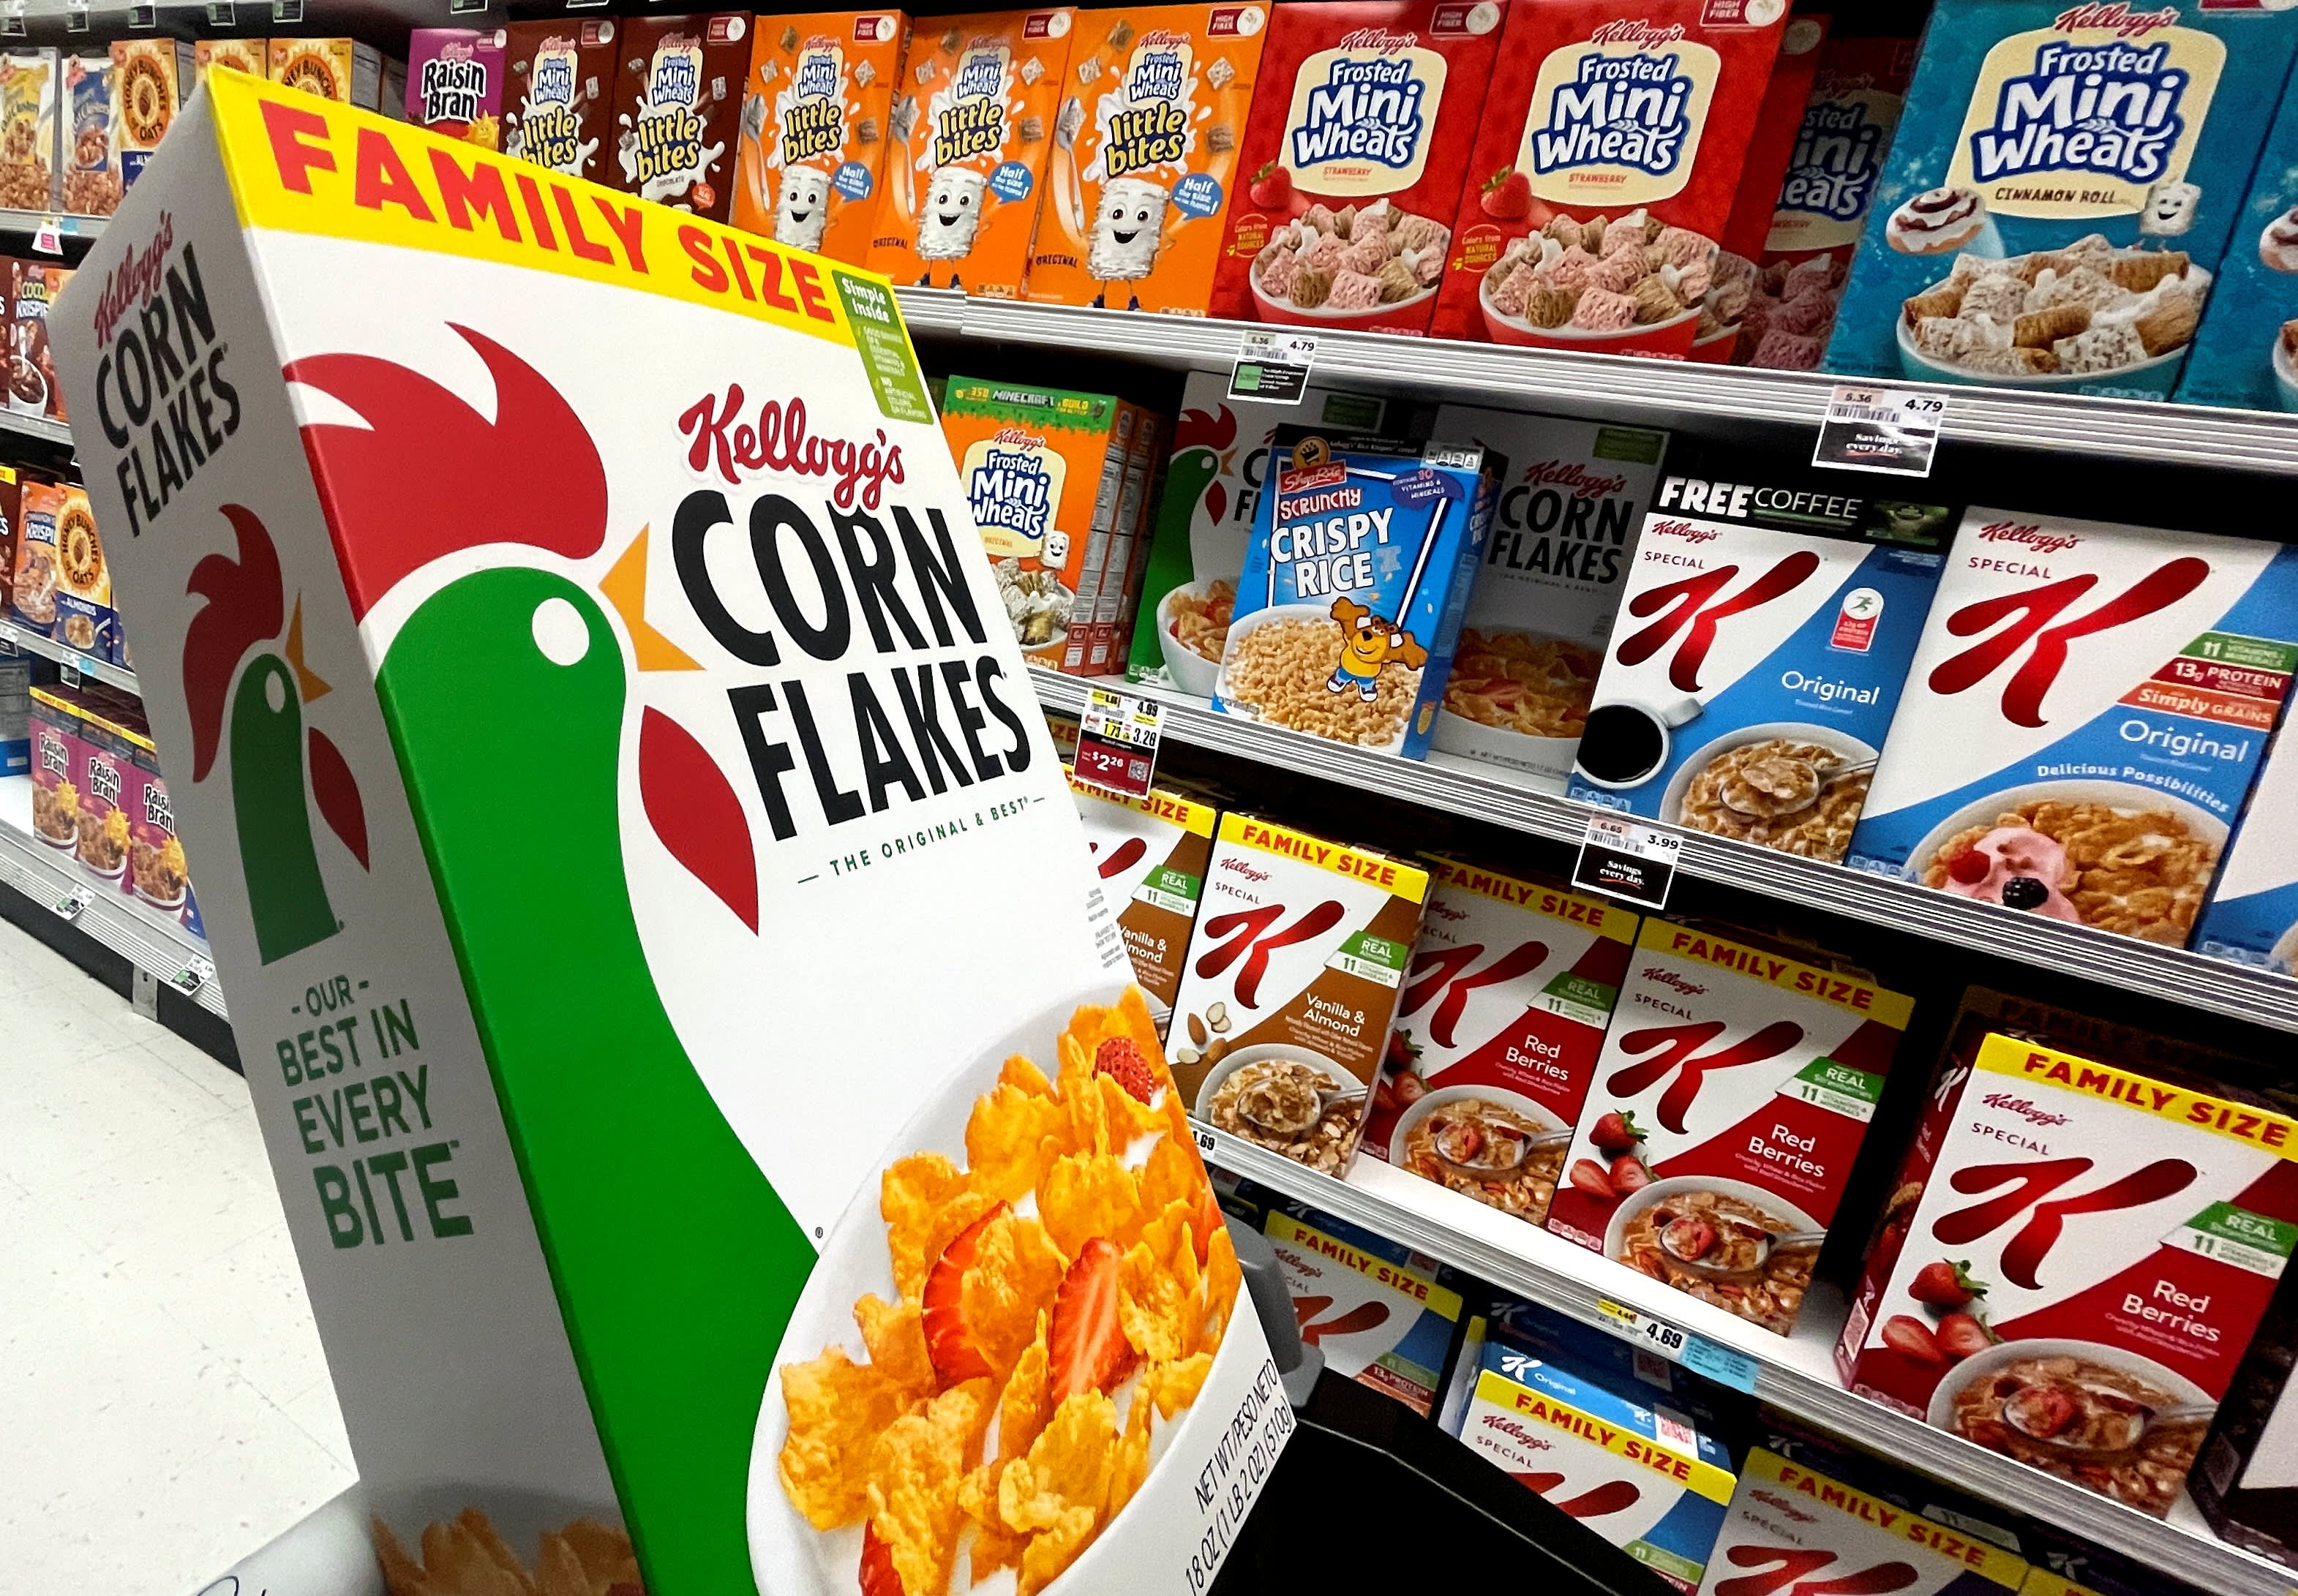 Kellogg's cereal business WK Kellogg begins trading